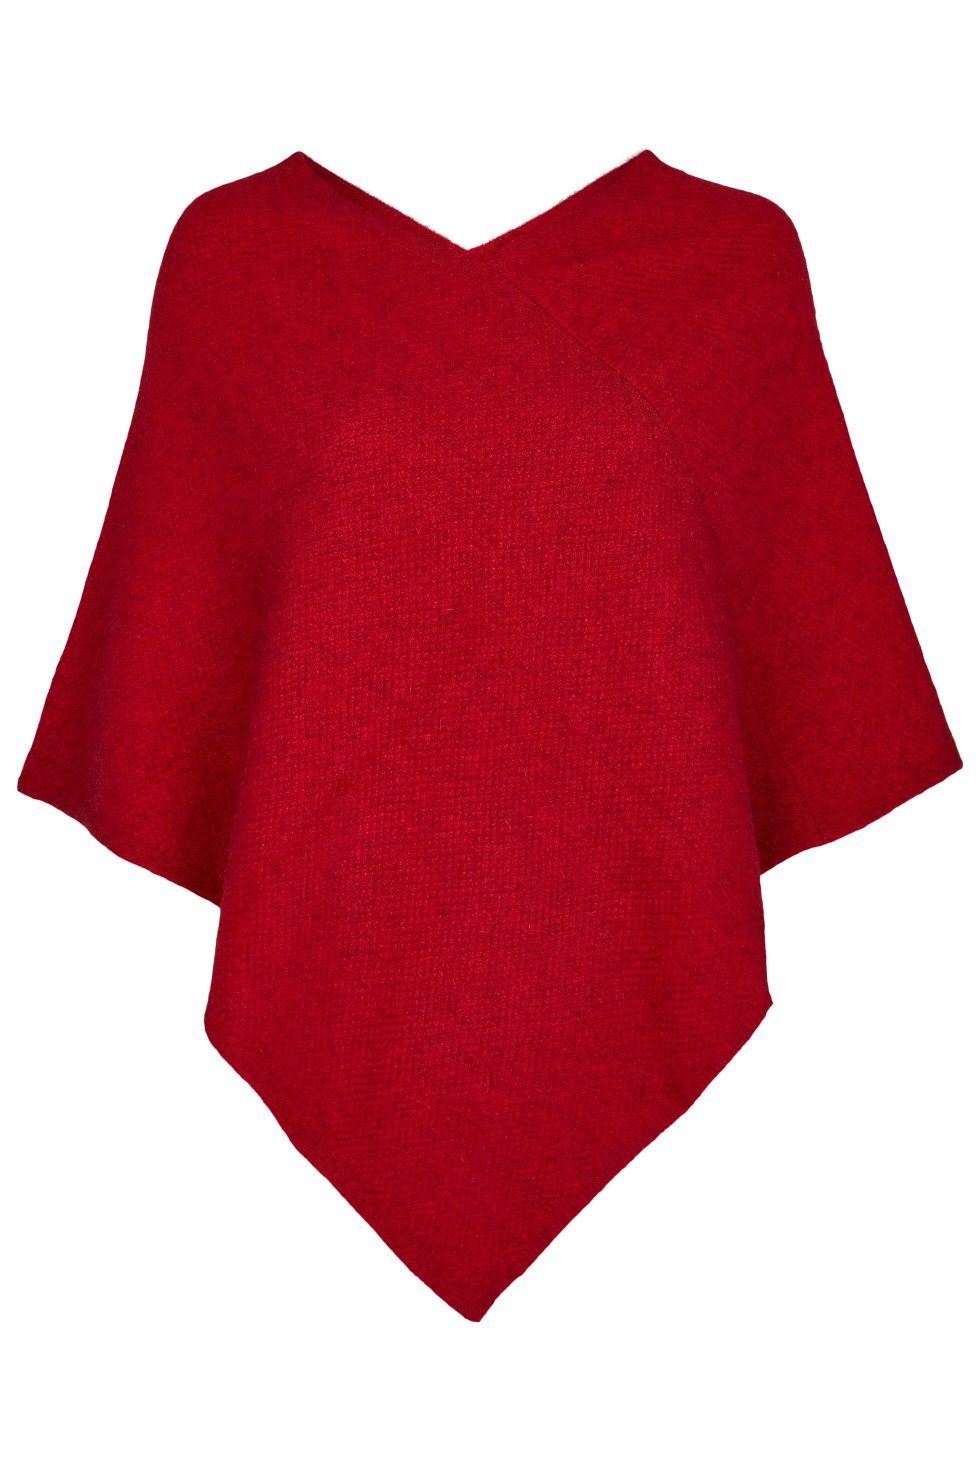 Koru Knitwear Strickponcho Possum Merino Koru Poncho aus der Possumhaarfaser Unifarben red